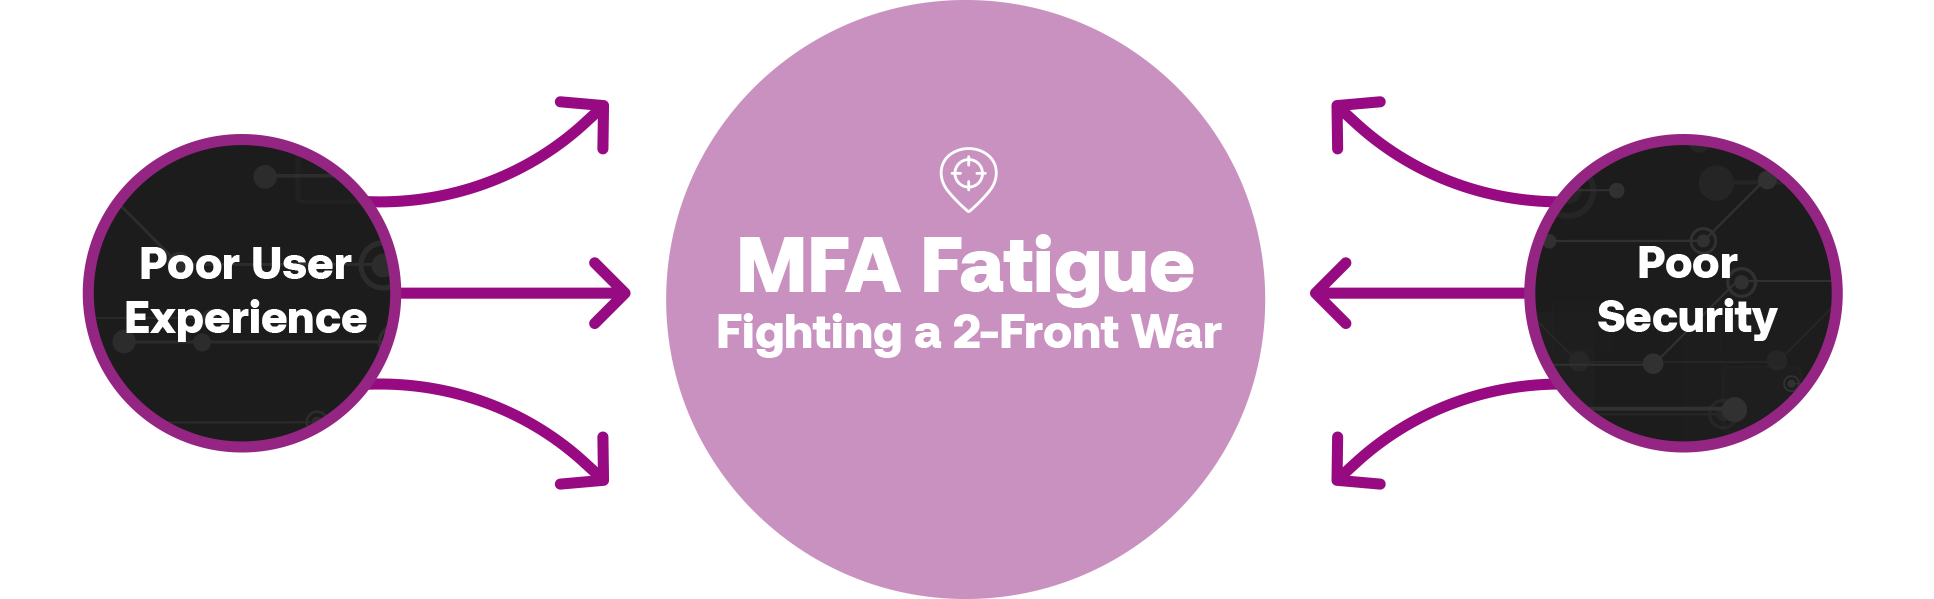 MFA Fatigue - Fighting a 2-Front War